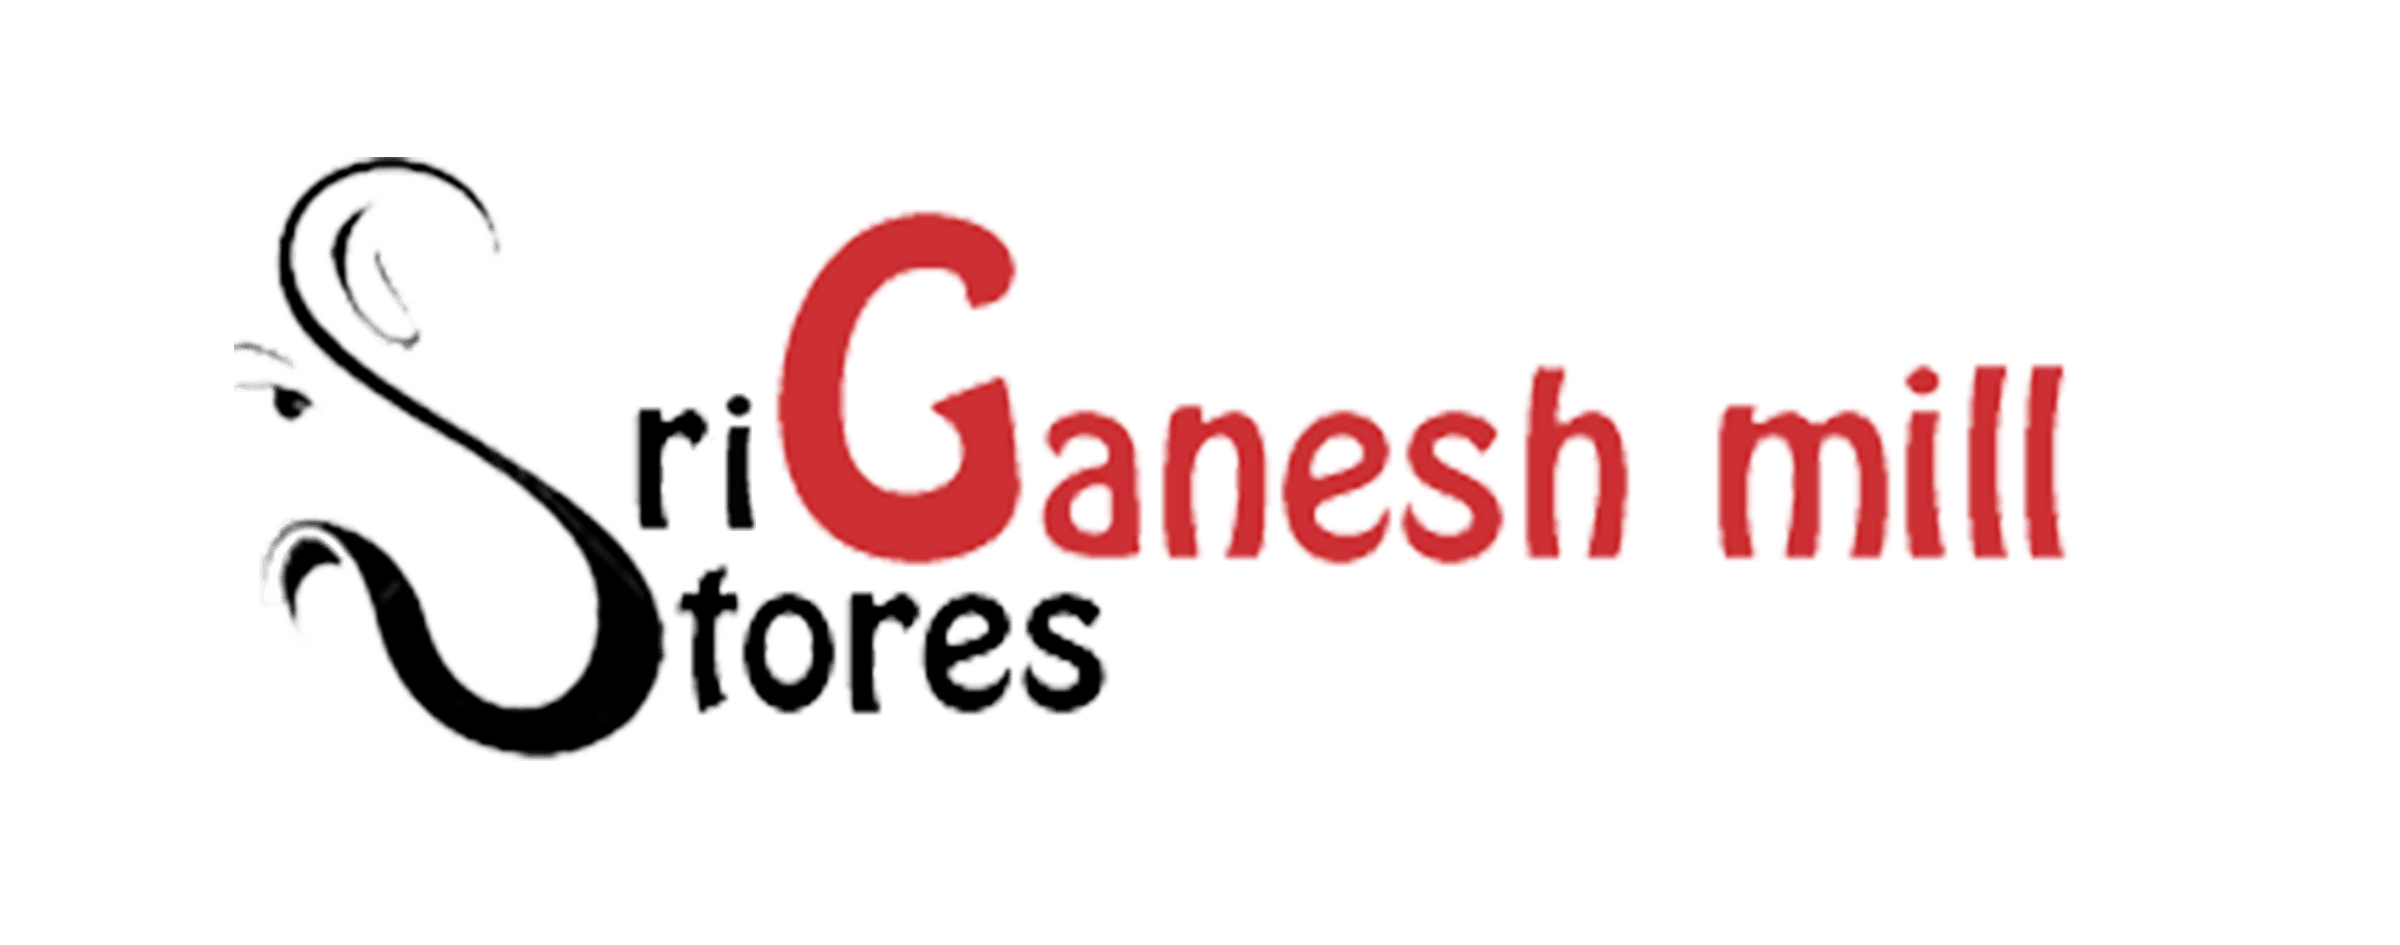 Sri Ganesh Mill Stores - Logo